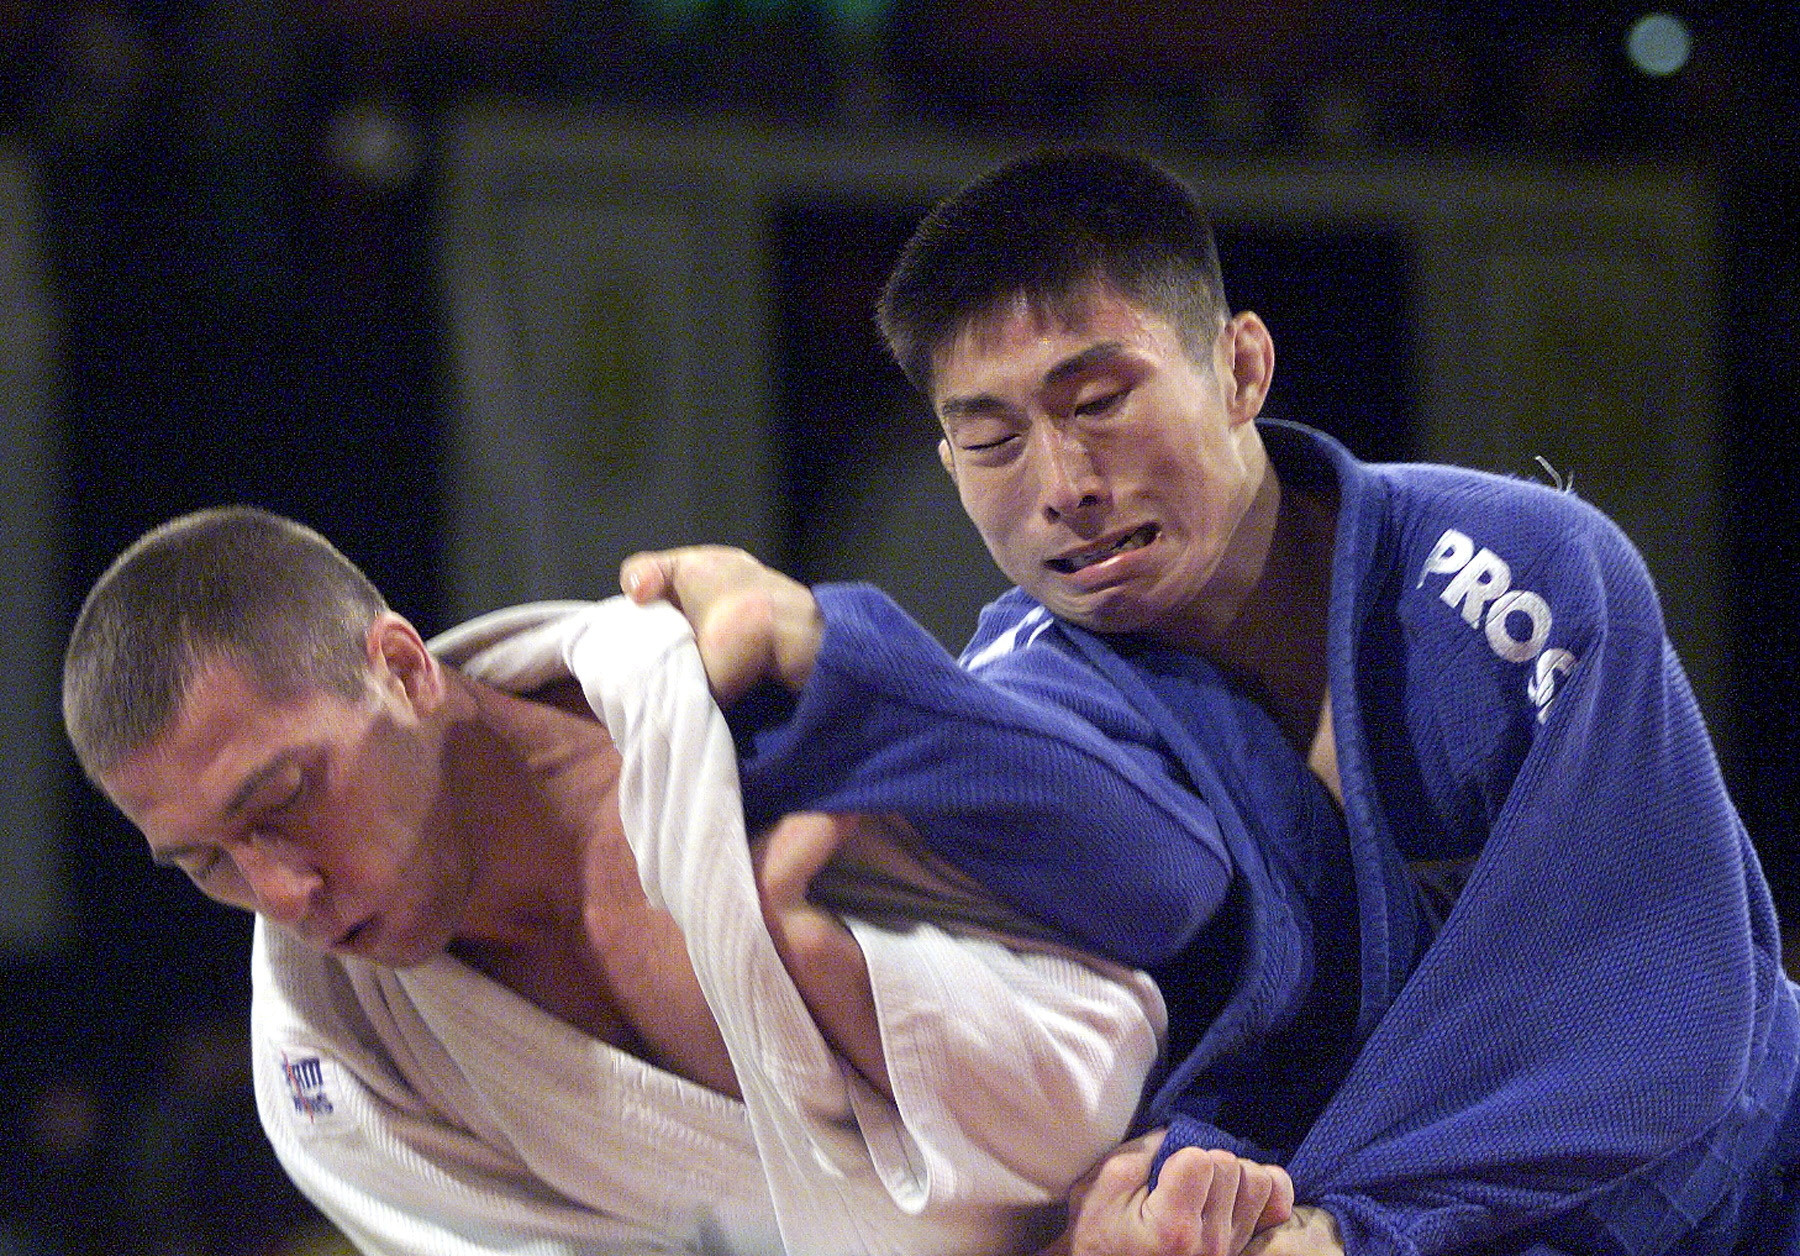 Hüseyin Özkan, left, was Turkey's last Olympic judo medallist, winning gold at Sydney 2000 ©Getty Images 